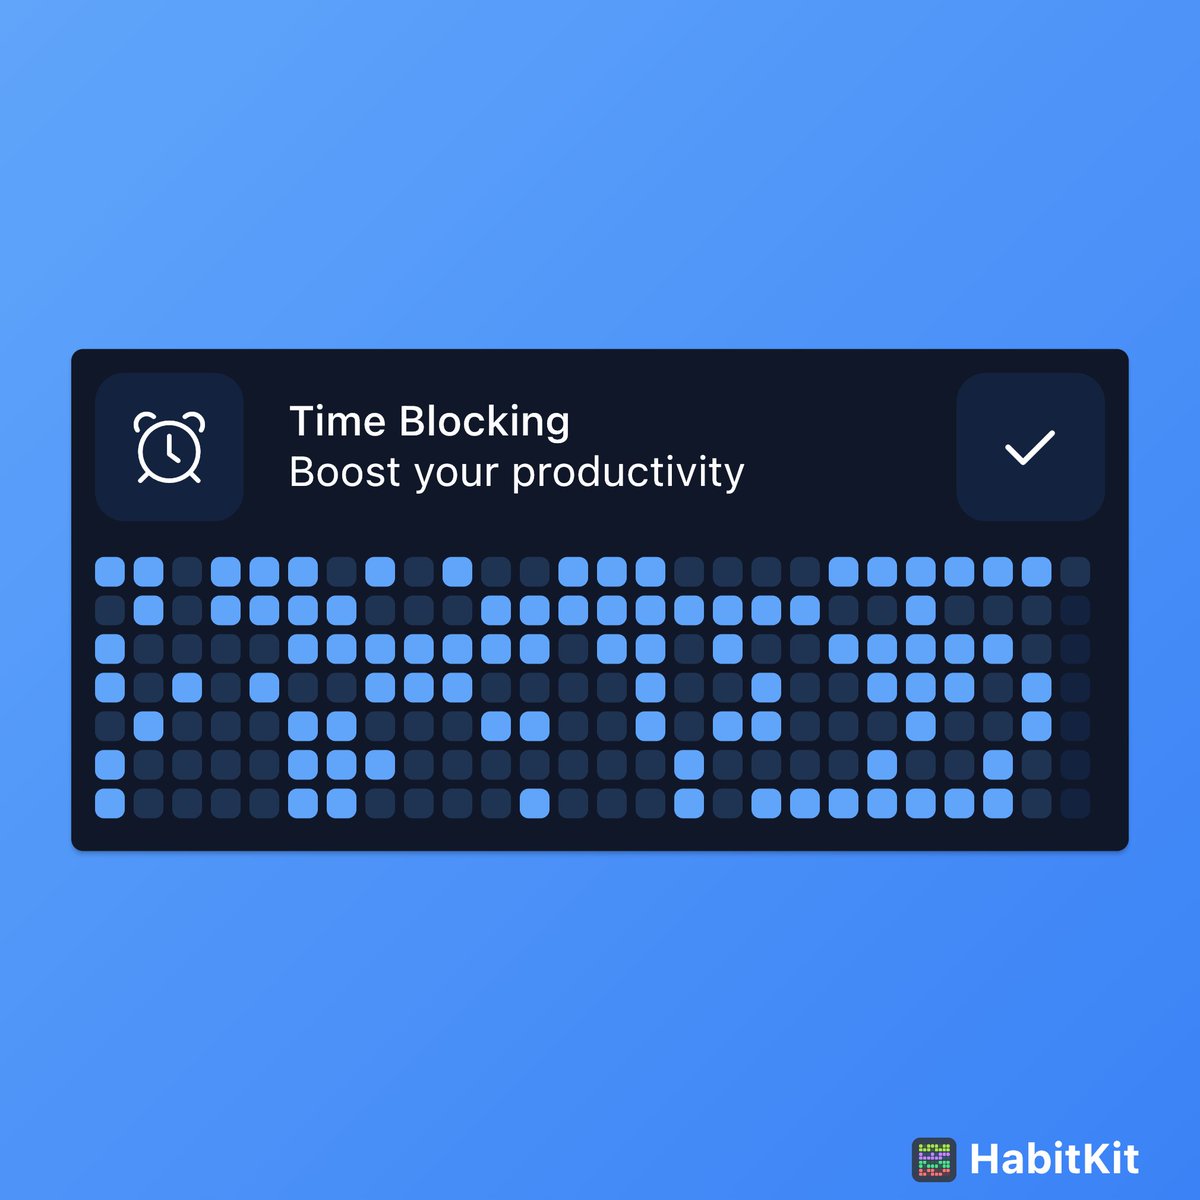 Boost your productivity with habitkit.app ⏰✍️

#habits #healthyhabits #atomichabits #successhabits #goodhabits #habittracker #productivity #timeblocking #pomodoro